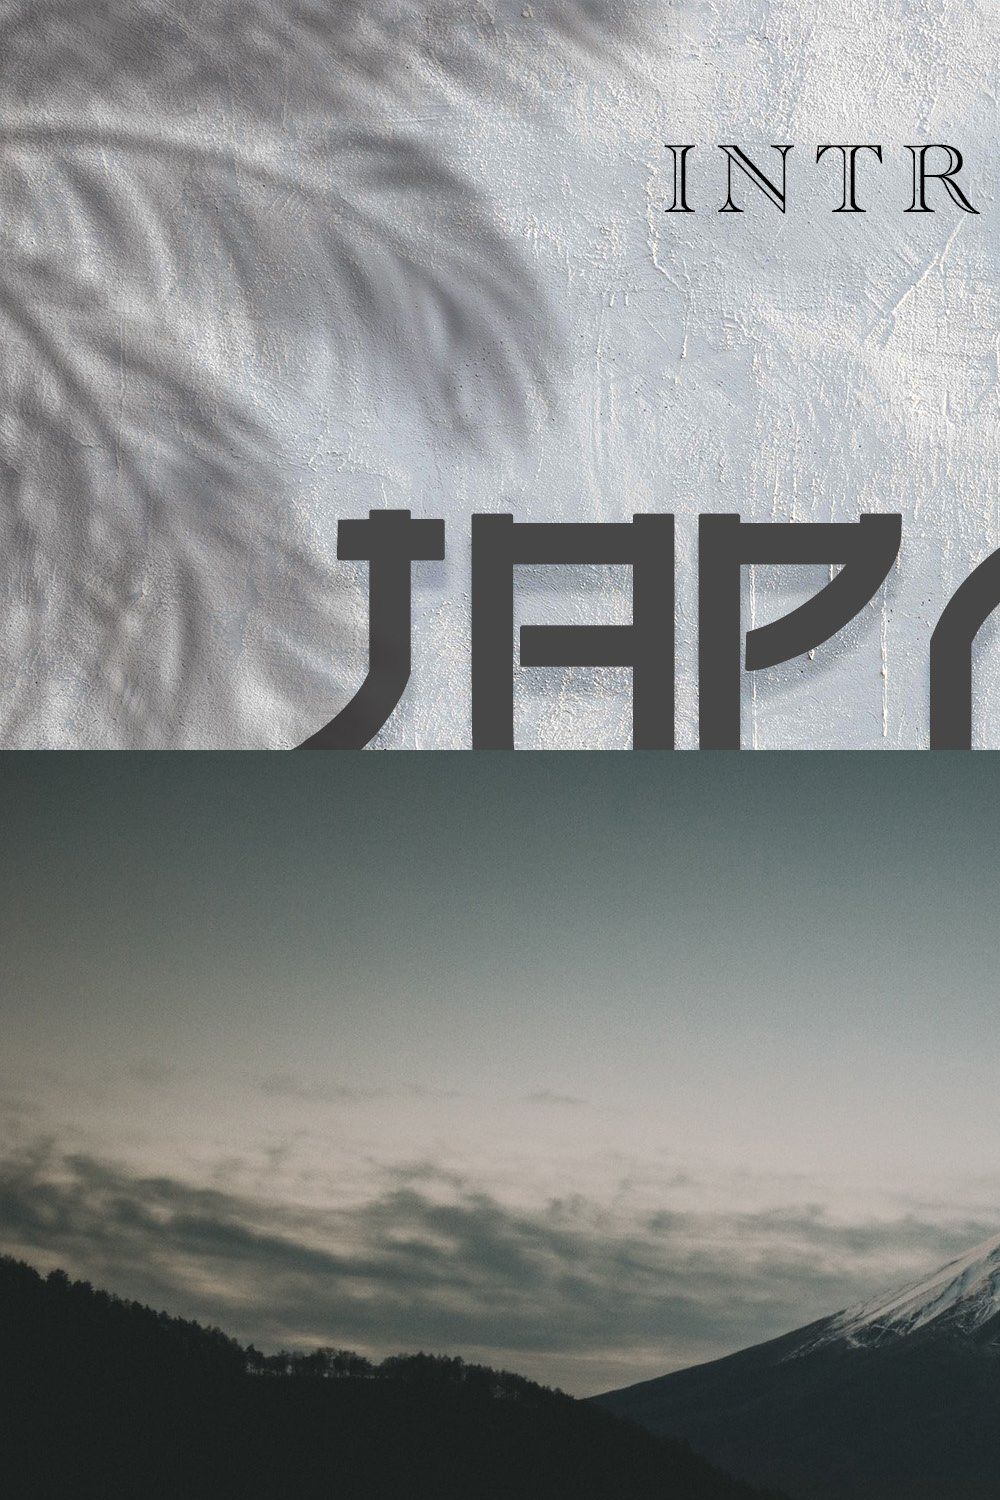 Japoleon Regular - Japan Style Font pinterest preview image.